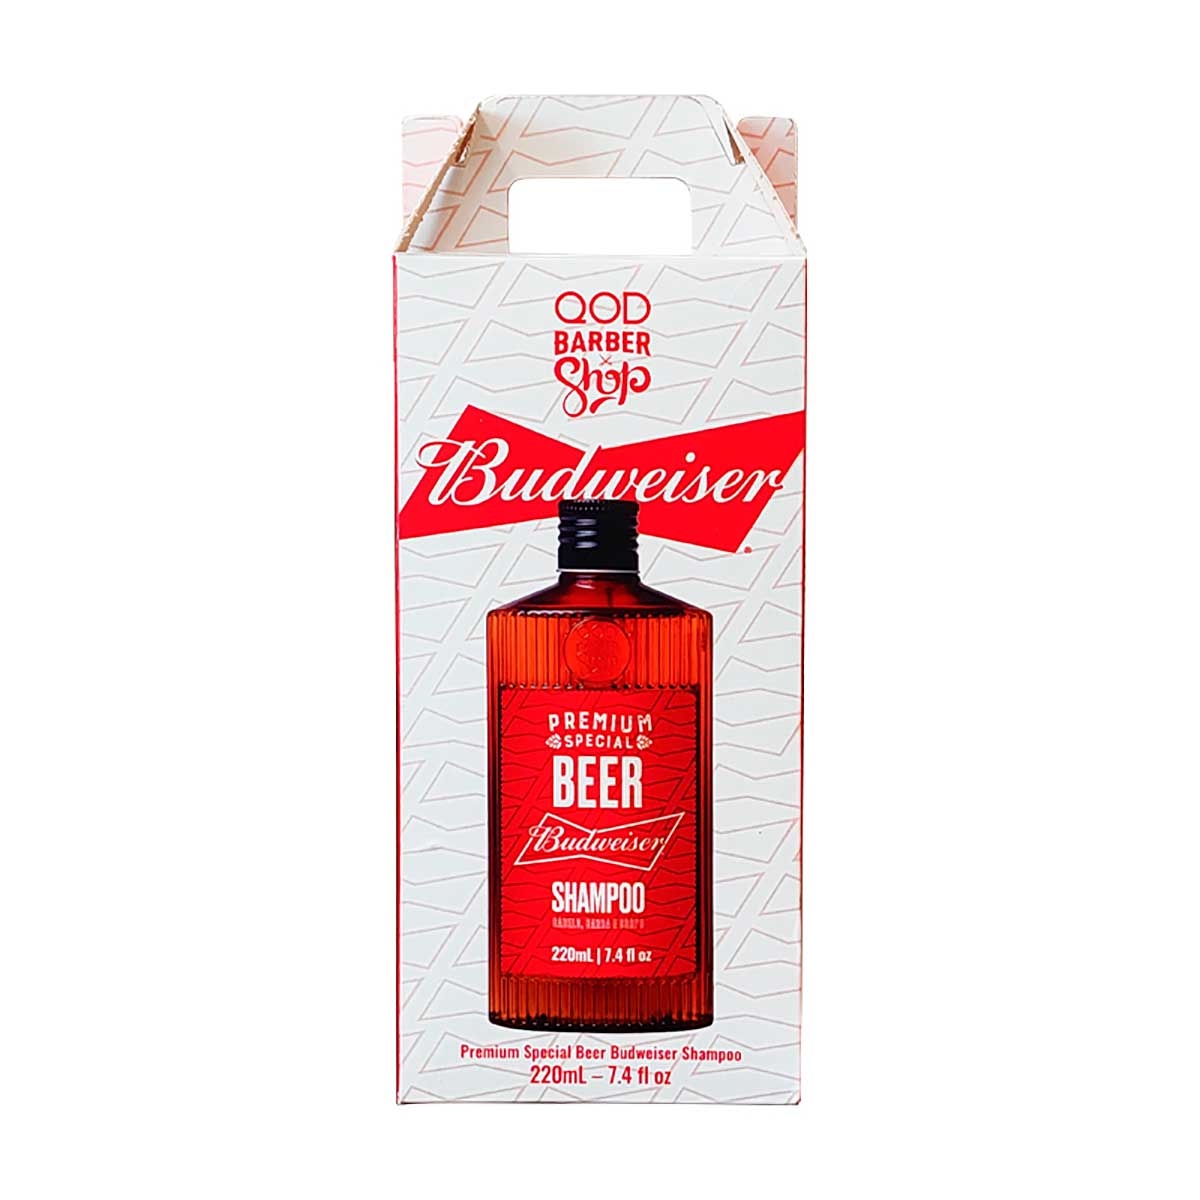 Shampoo QOD Barber Shop Premium Beer Budweiser com 220ml 220ml